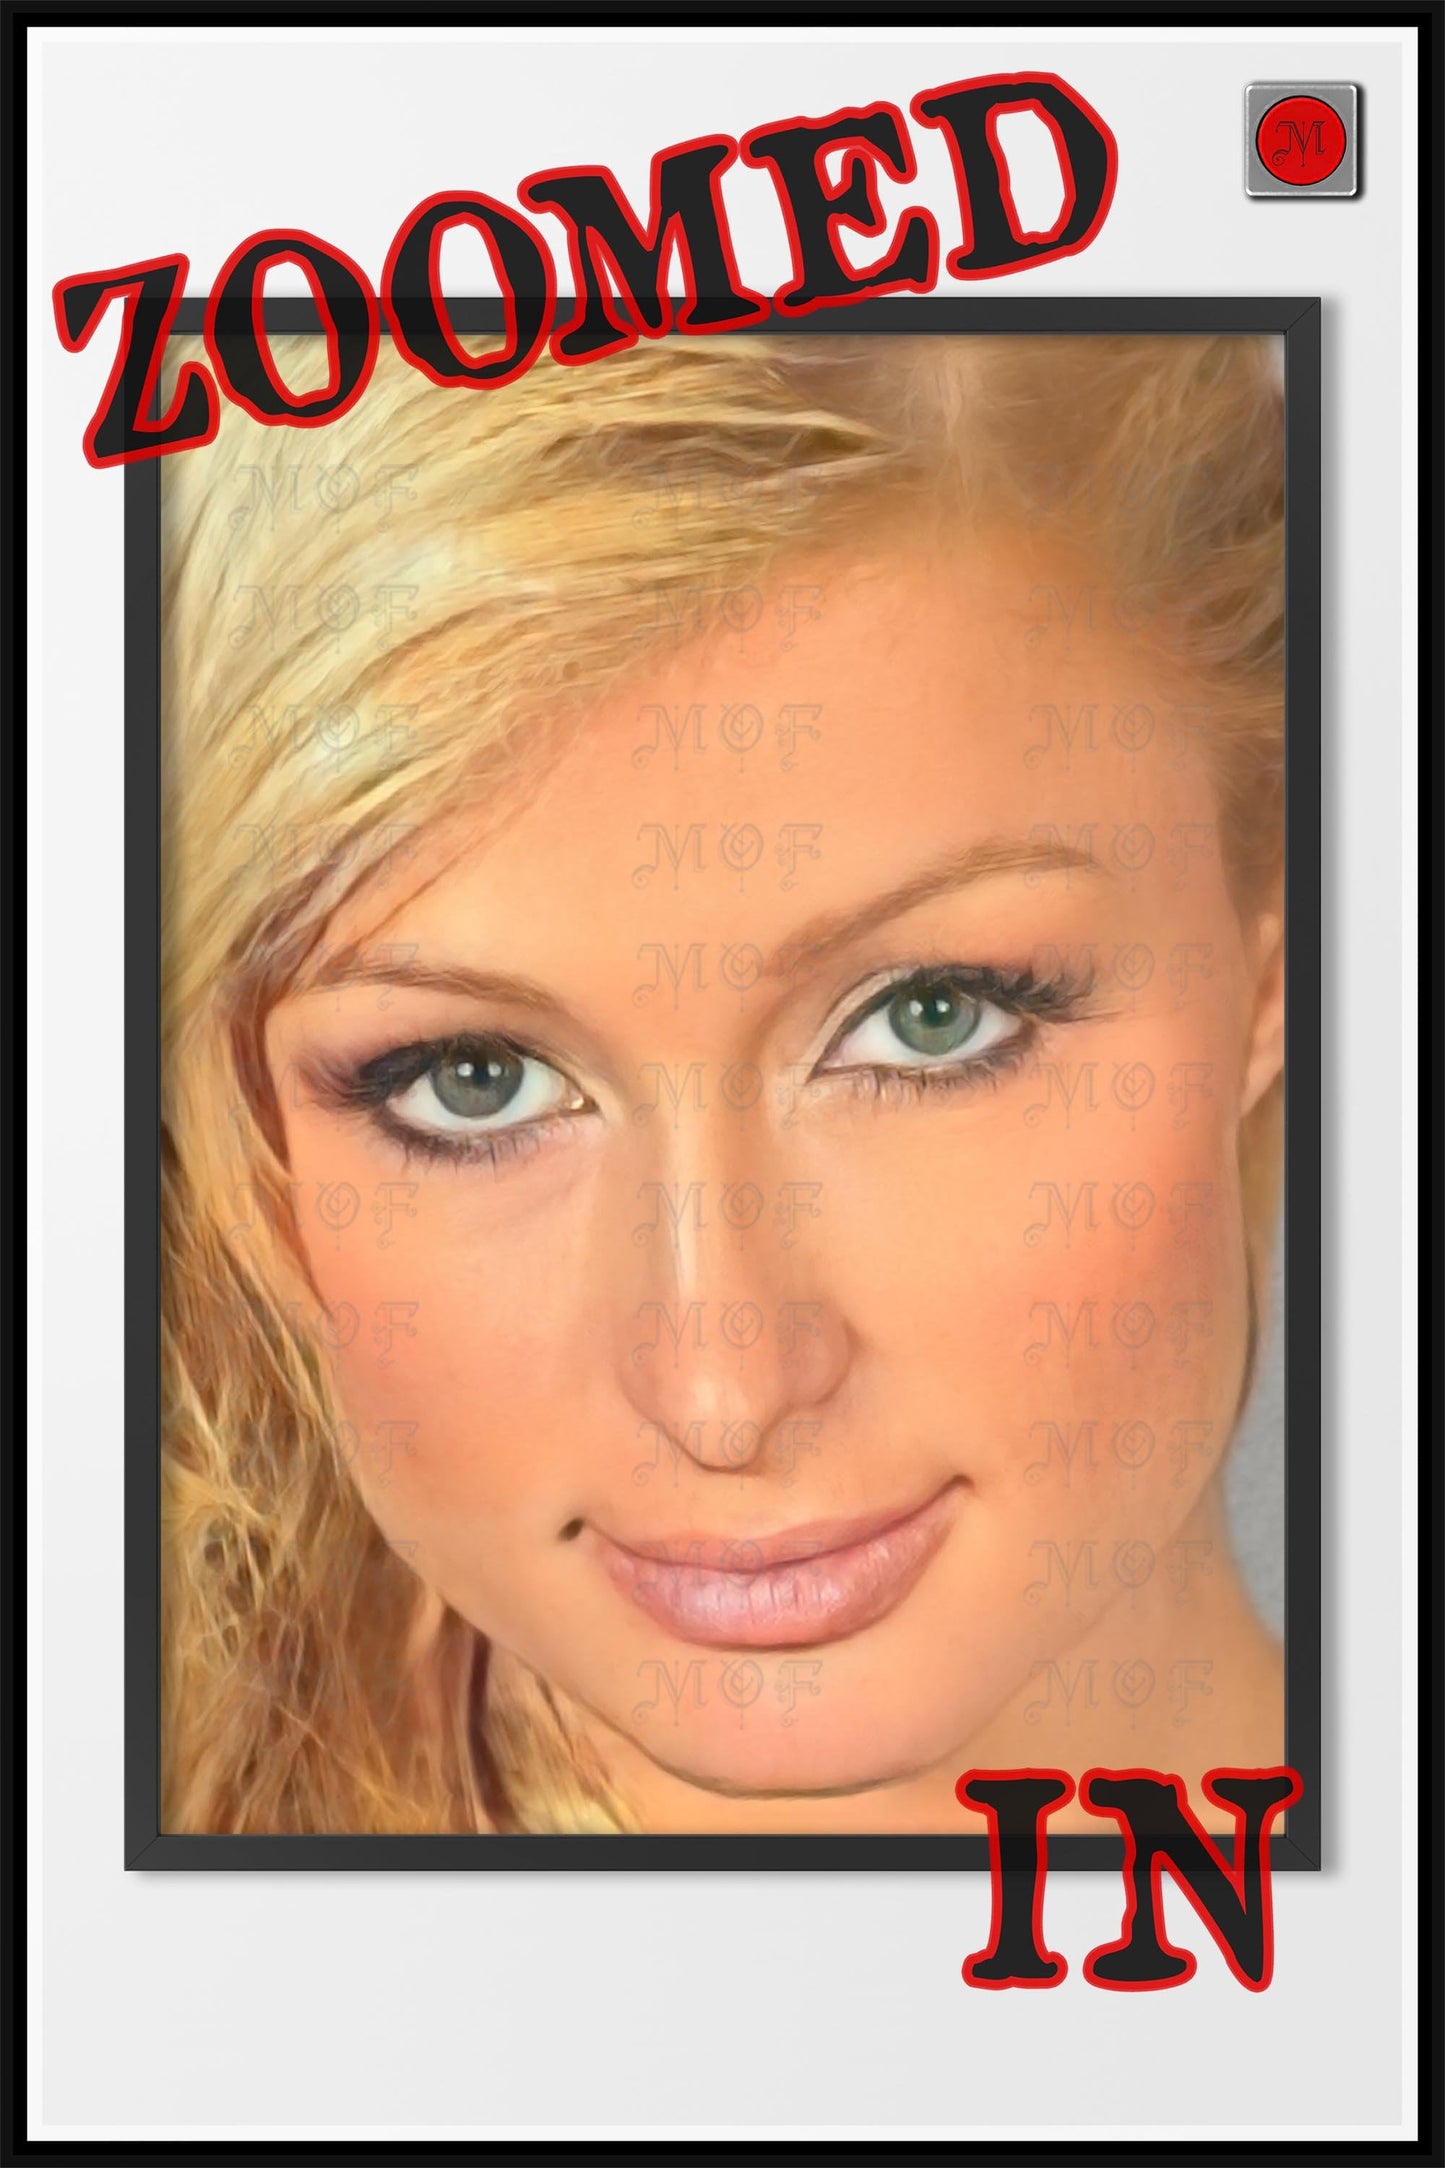 Paris Hilton Mugshot Poster Celebrity Photo REMASTERED #32 MUG